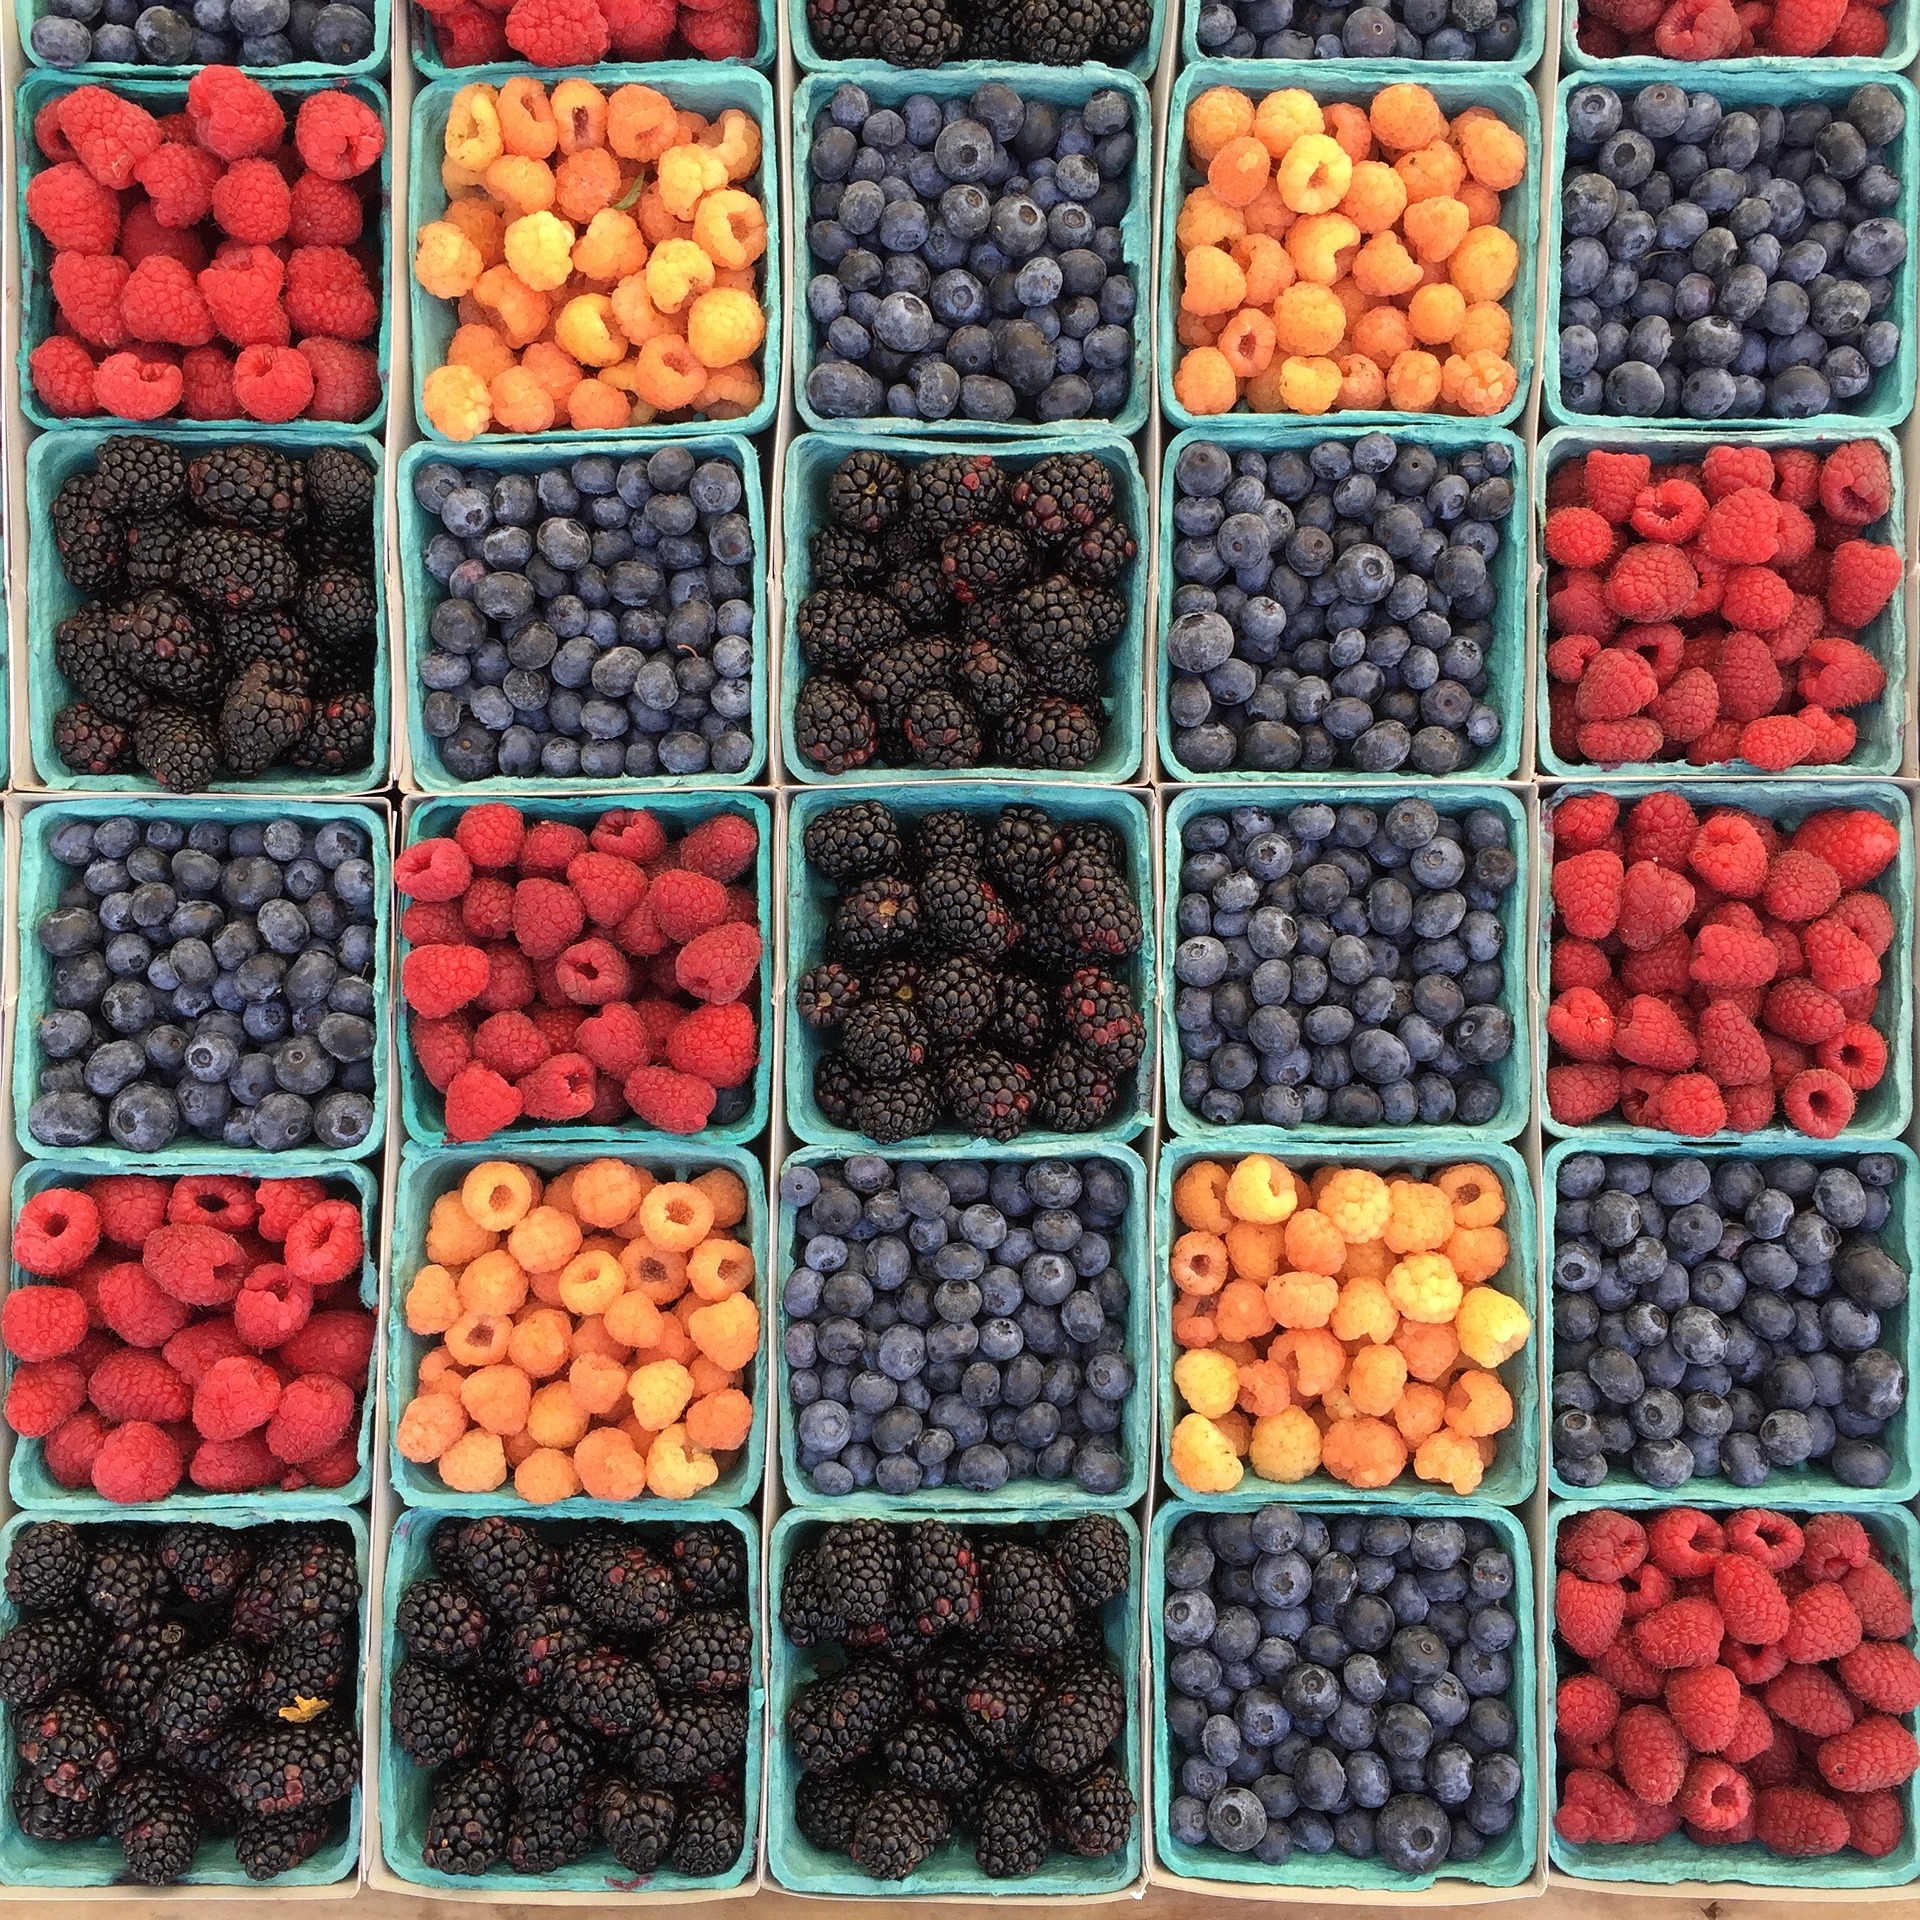 berries-1841064_1920 (002)